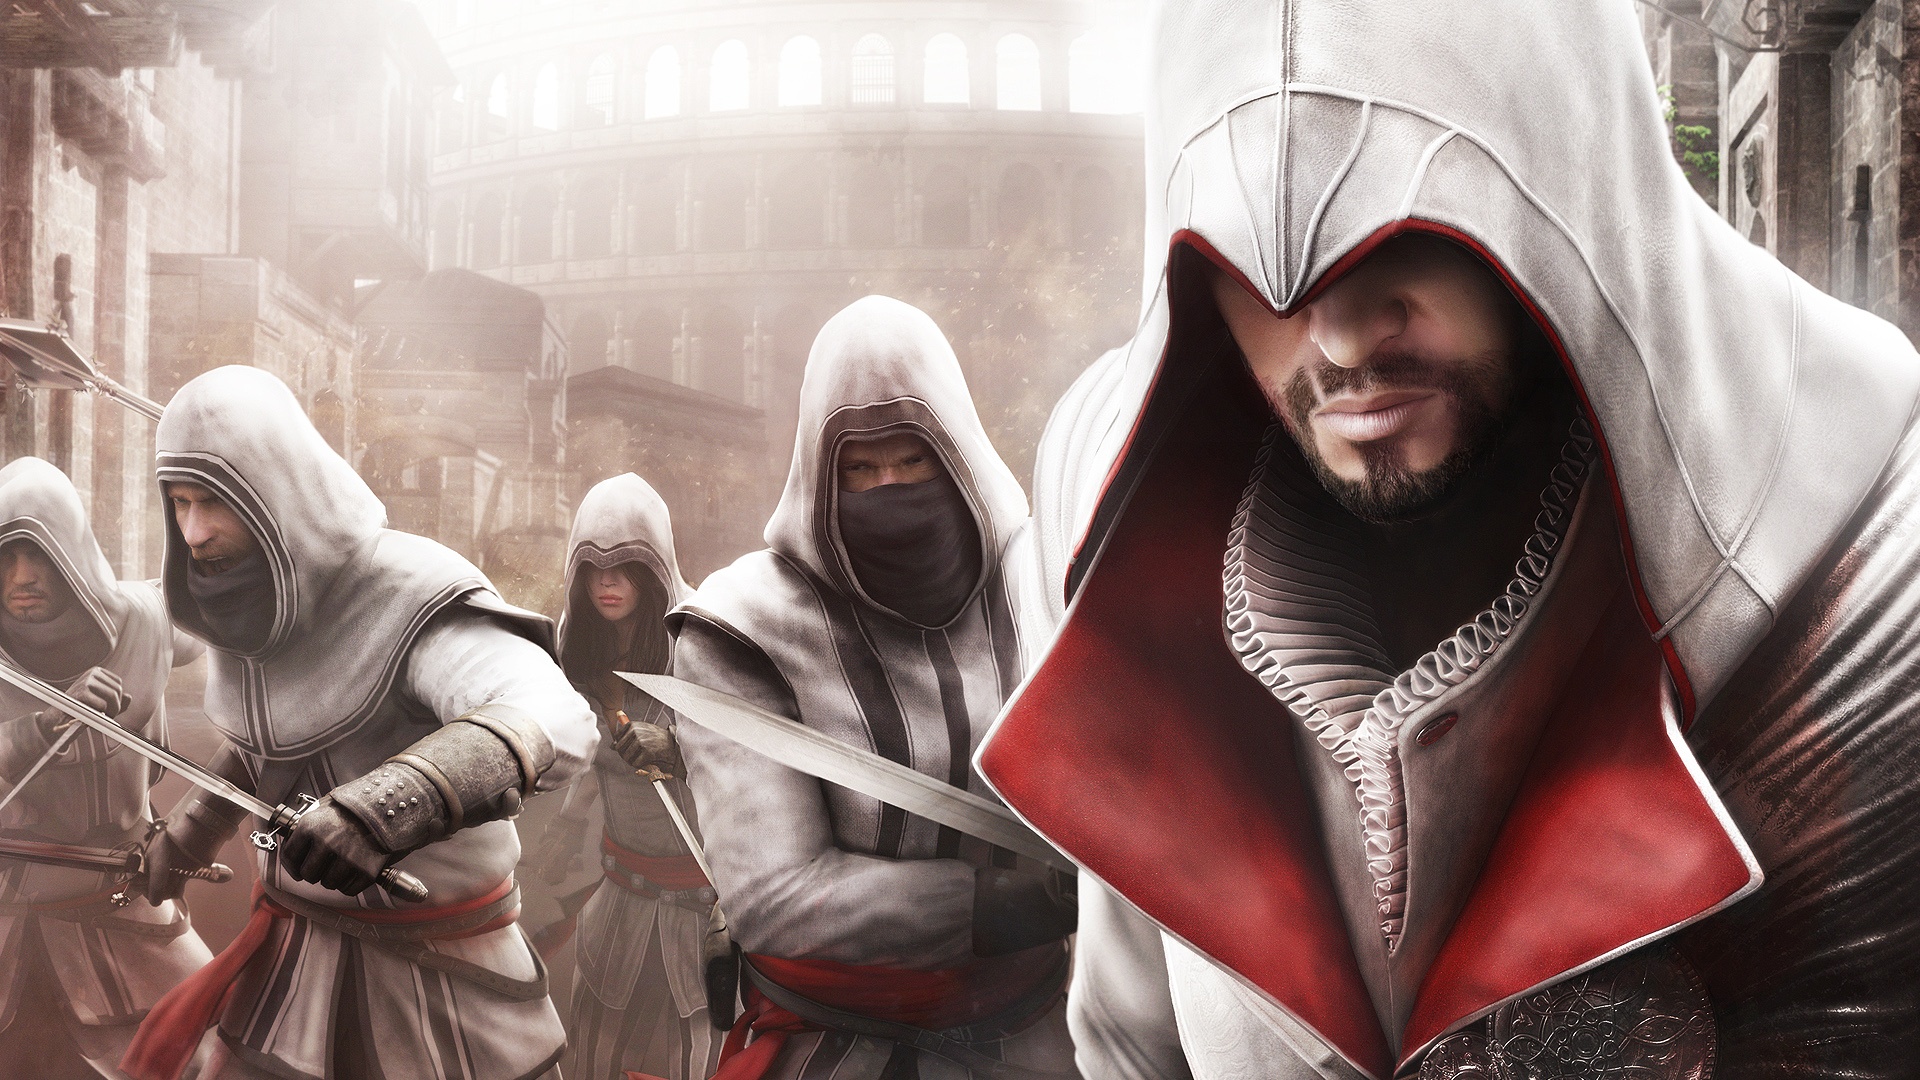 desktop Images ezio (assassin's creed), video game, assassin's creed: brotherhood, assassin's creed